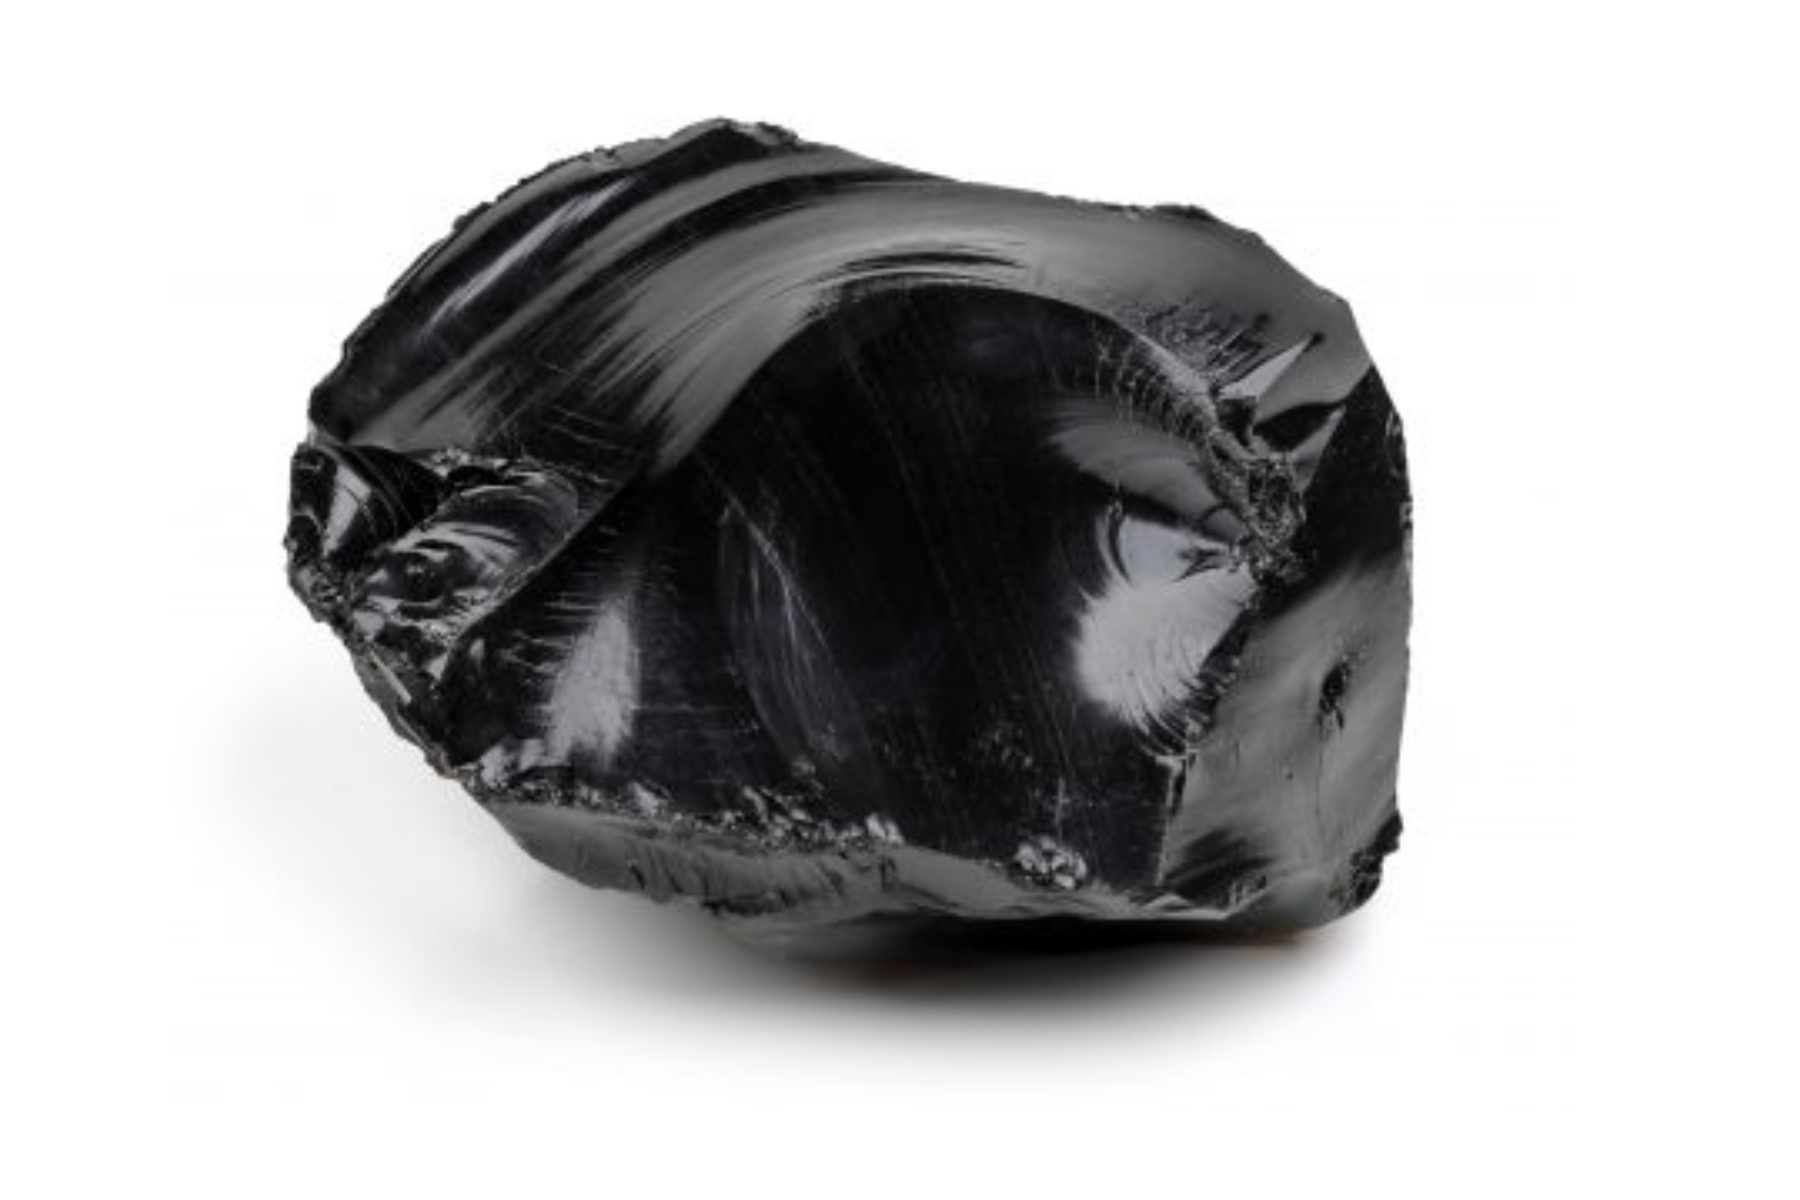 A smooth piece of black obsidian